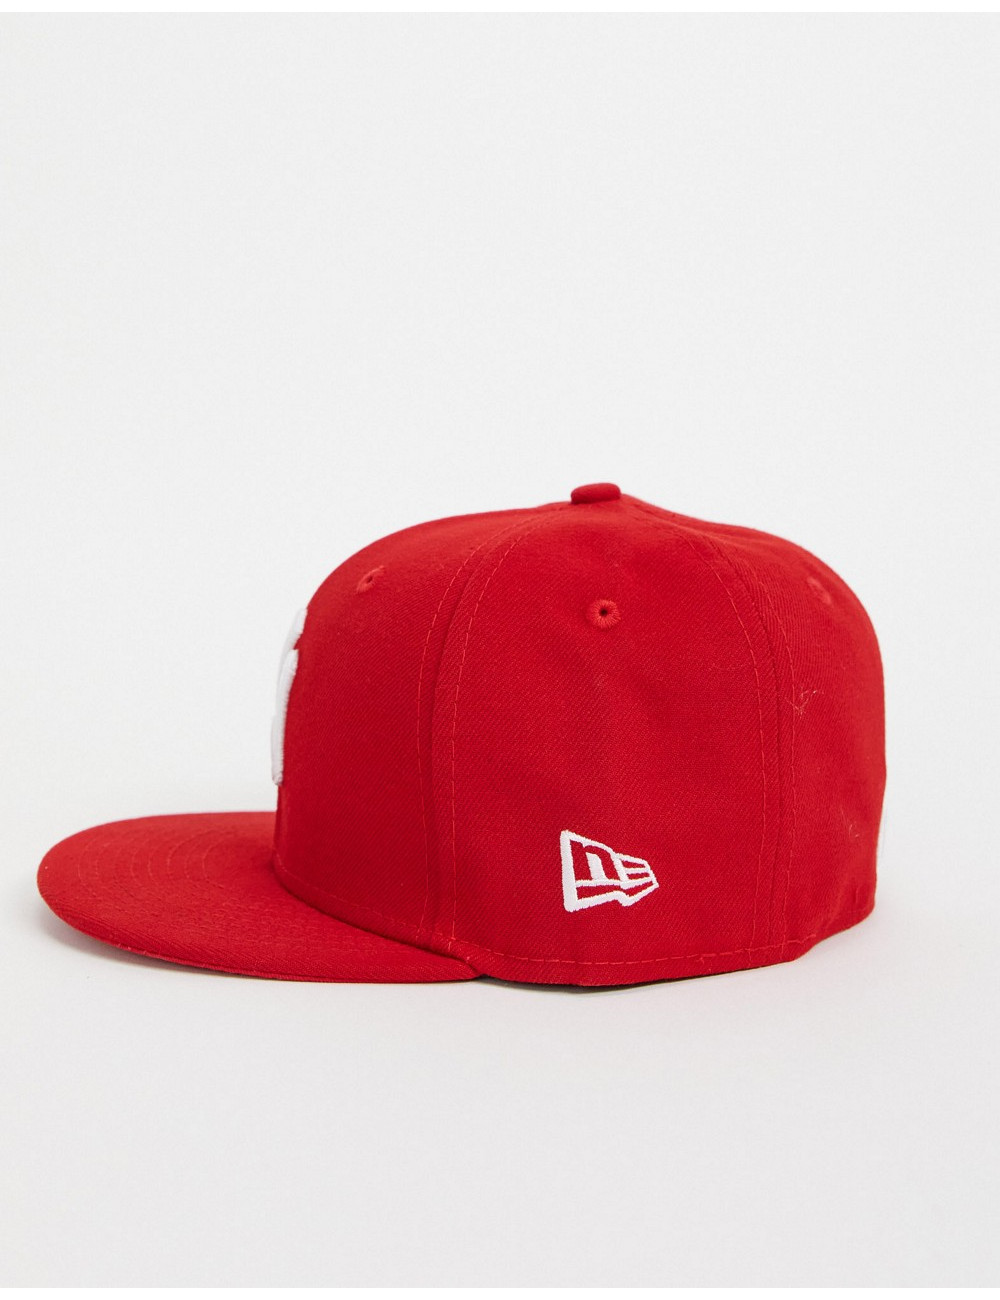 New Era 5950 cap in red